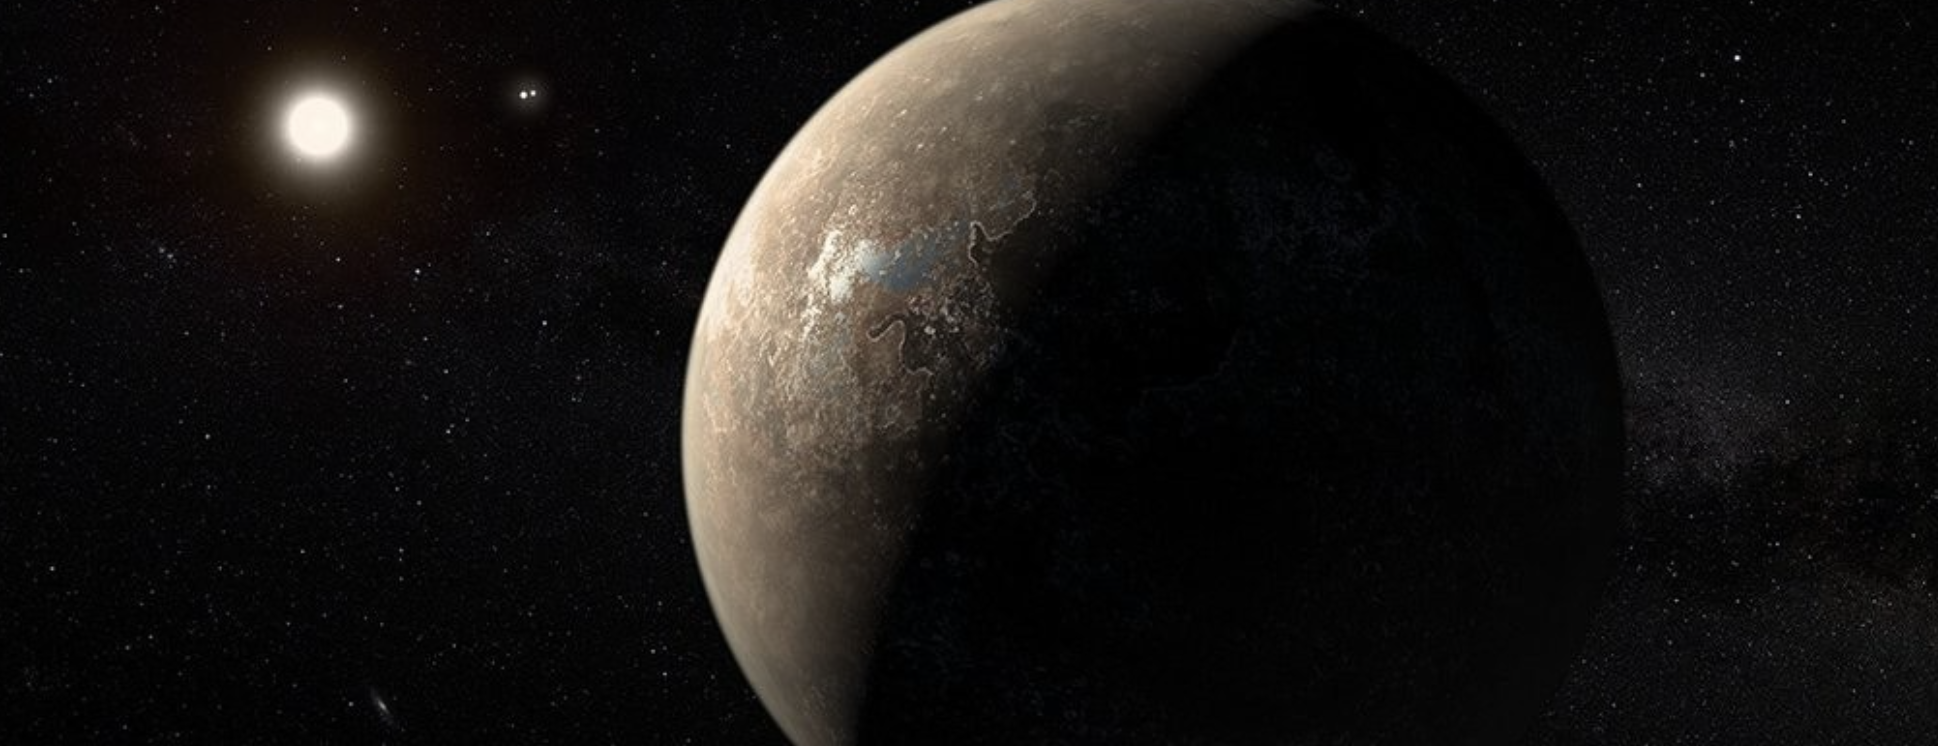 Worlds next door: looking for habitable planets around Alpha Centauri